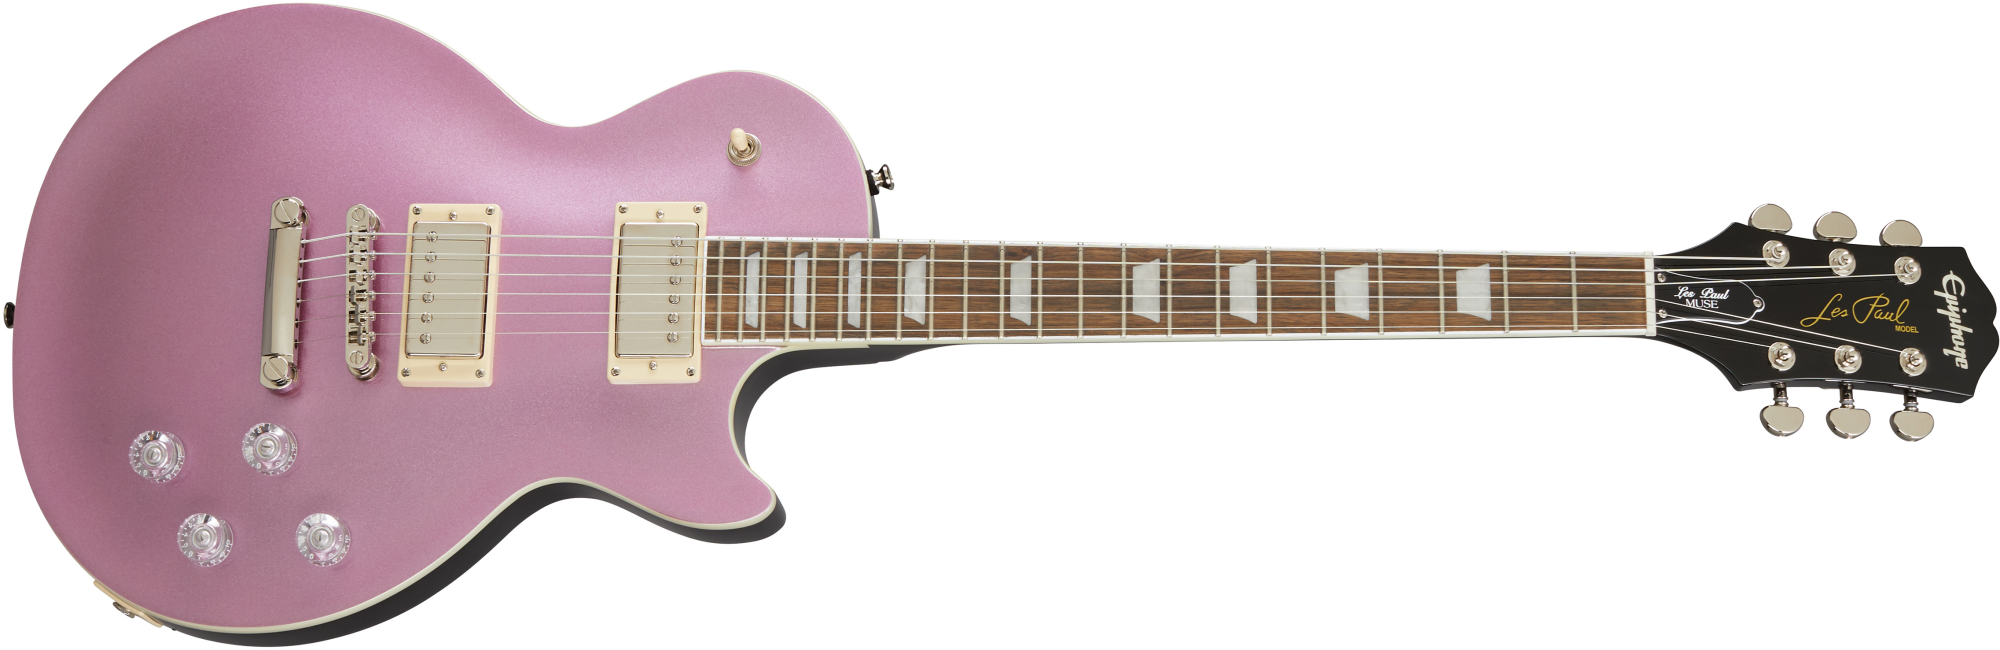 Billede af Epiphone Les Paul Muse El-guitar (Purple Passion Metallic)